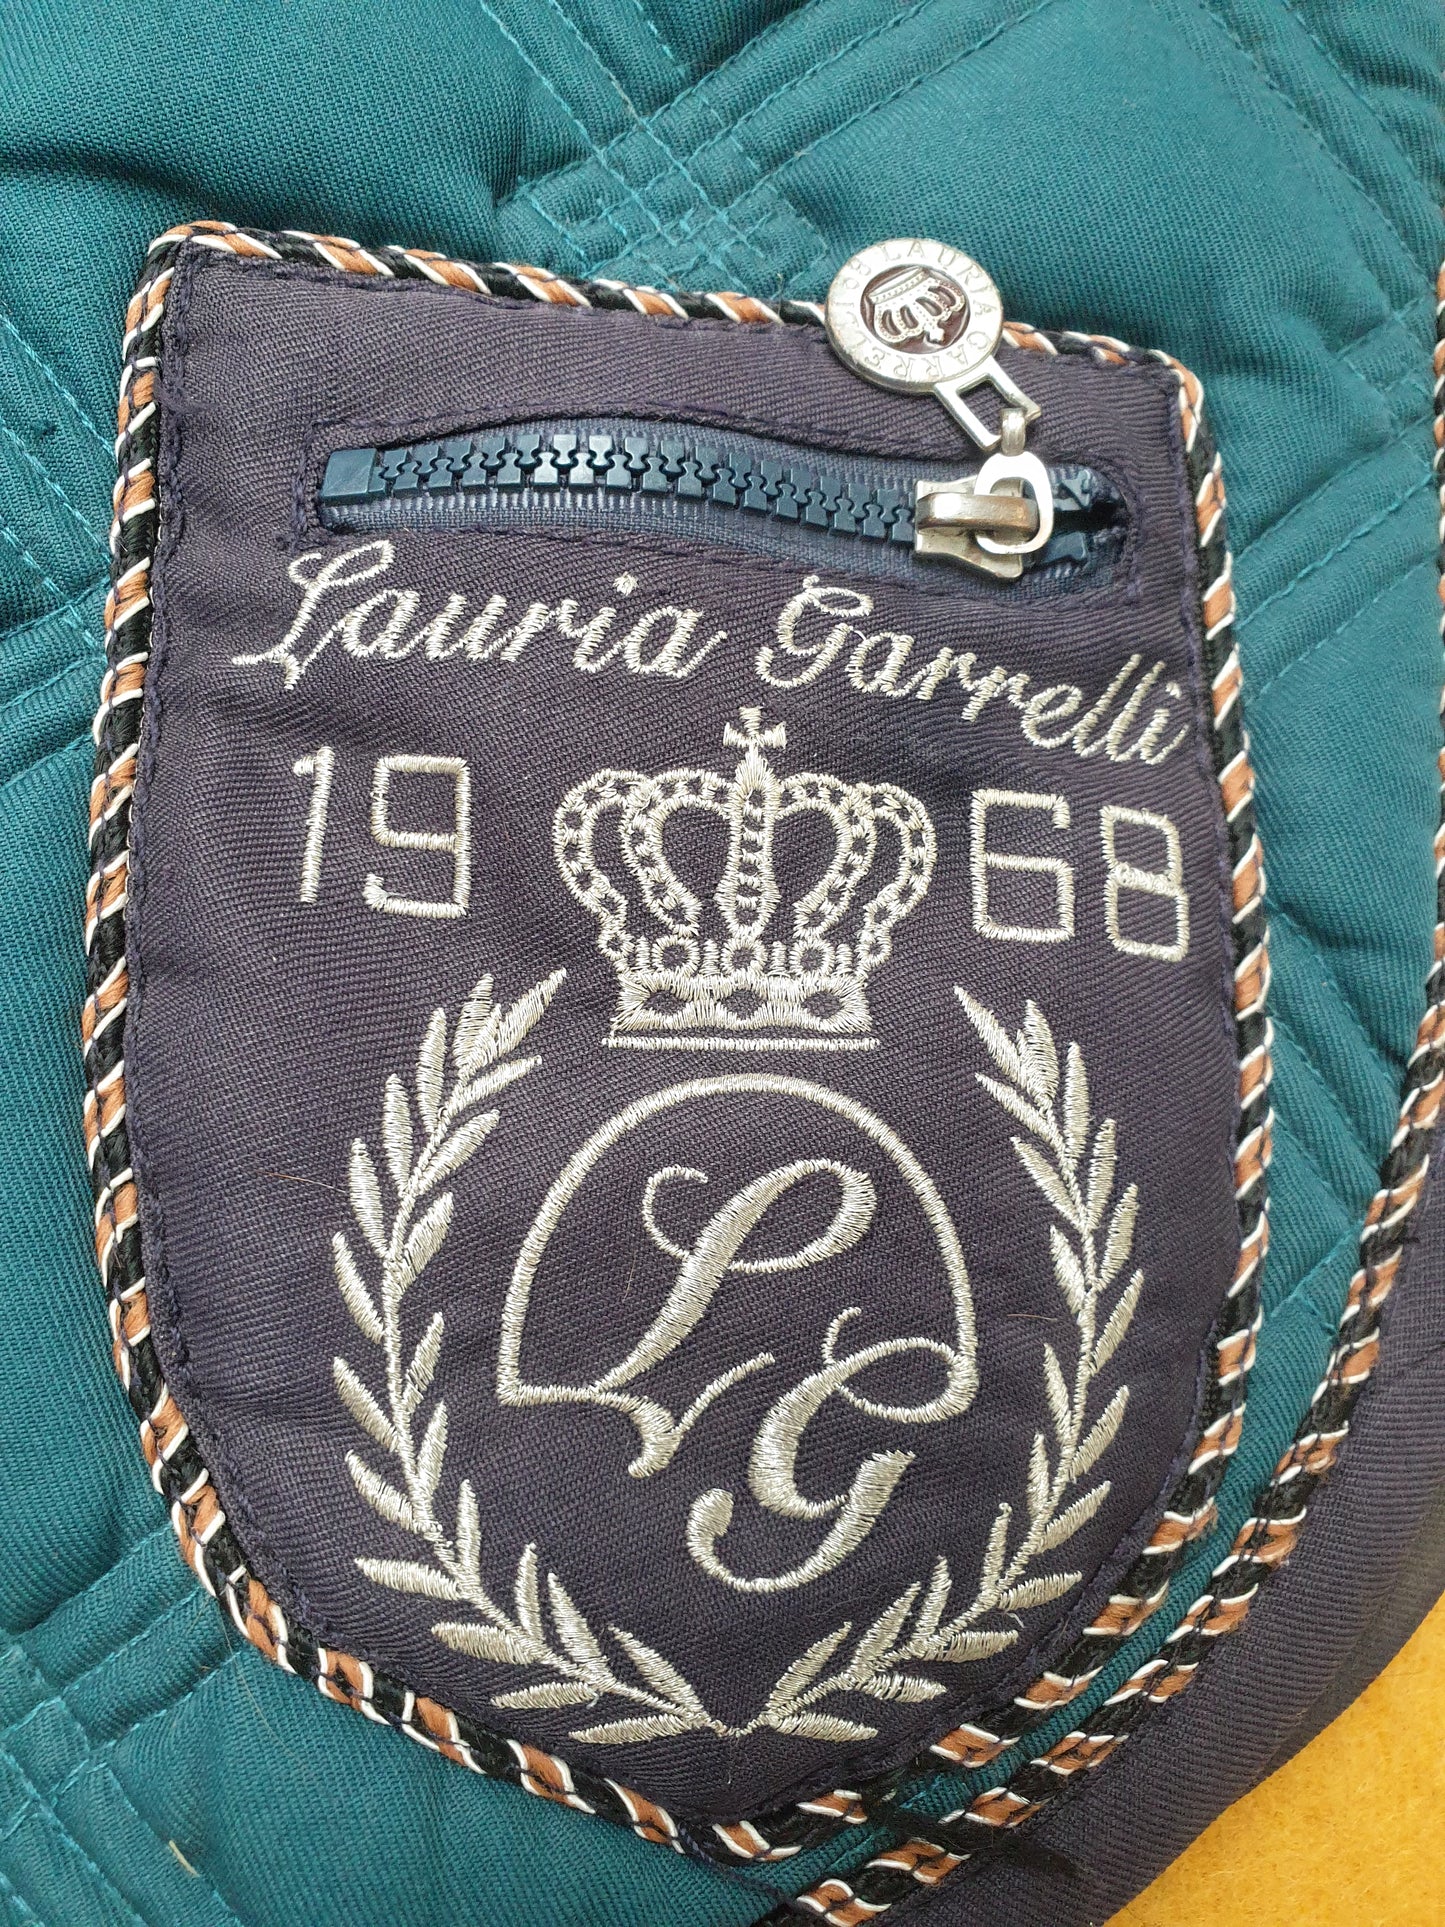 Green Lauria Garrelli cob size saddle pad FREE POSTAGE ✅